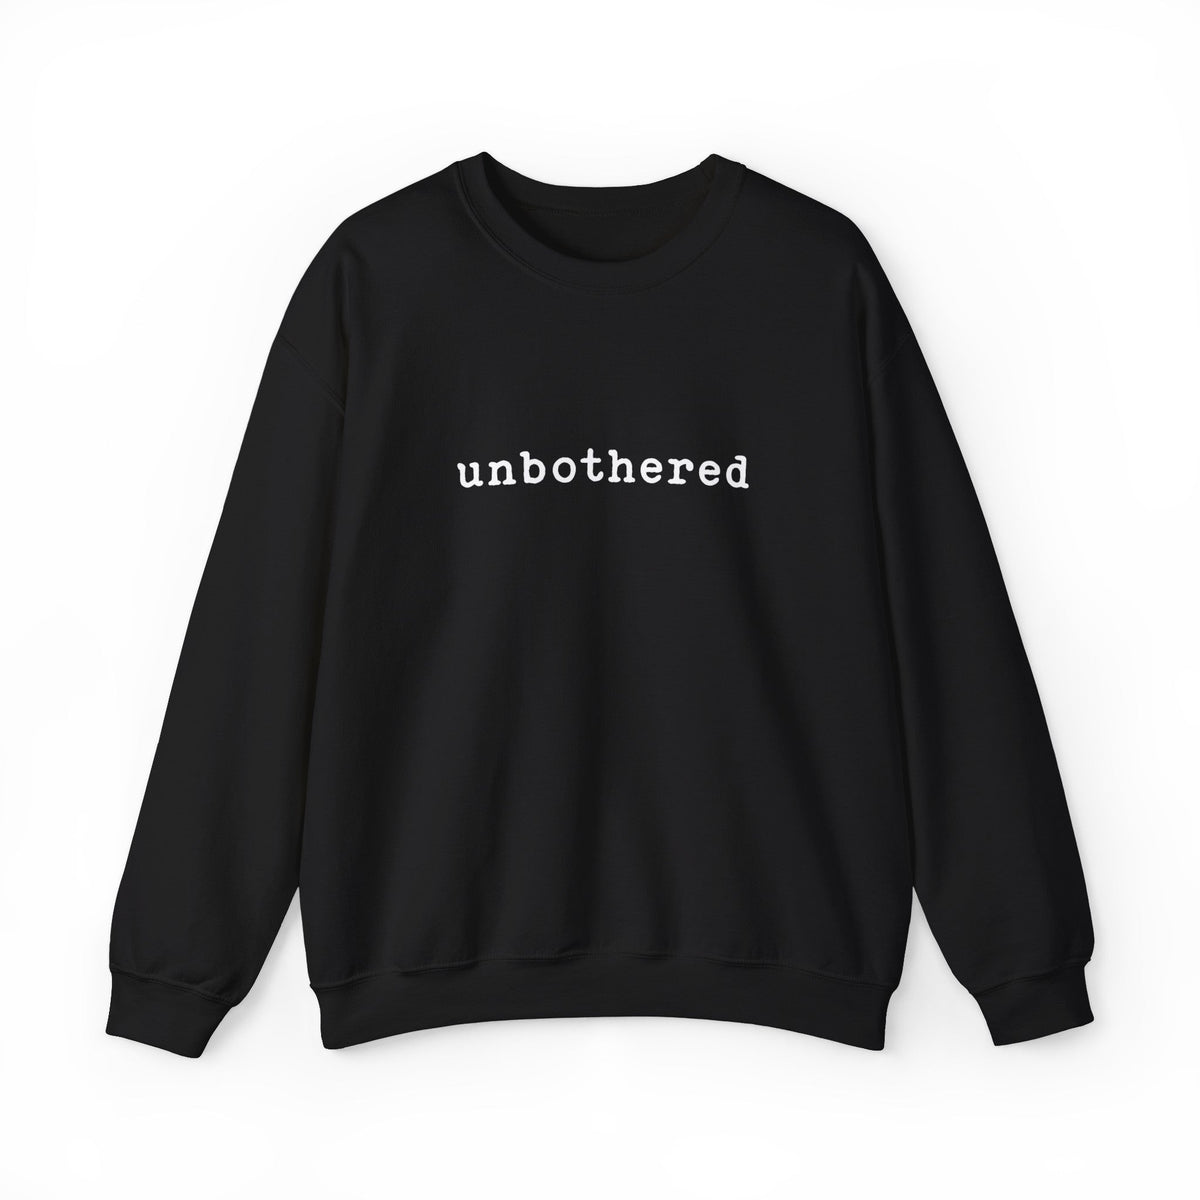 Unbothered Typewriter Long Sleeve Crew Neck Sweatshirt - Goth Cloth Co.Sweatshirt16586651236158867404